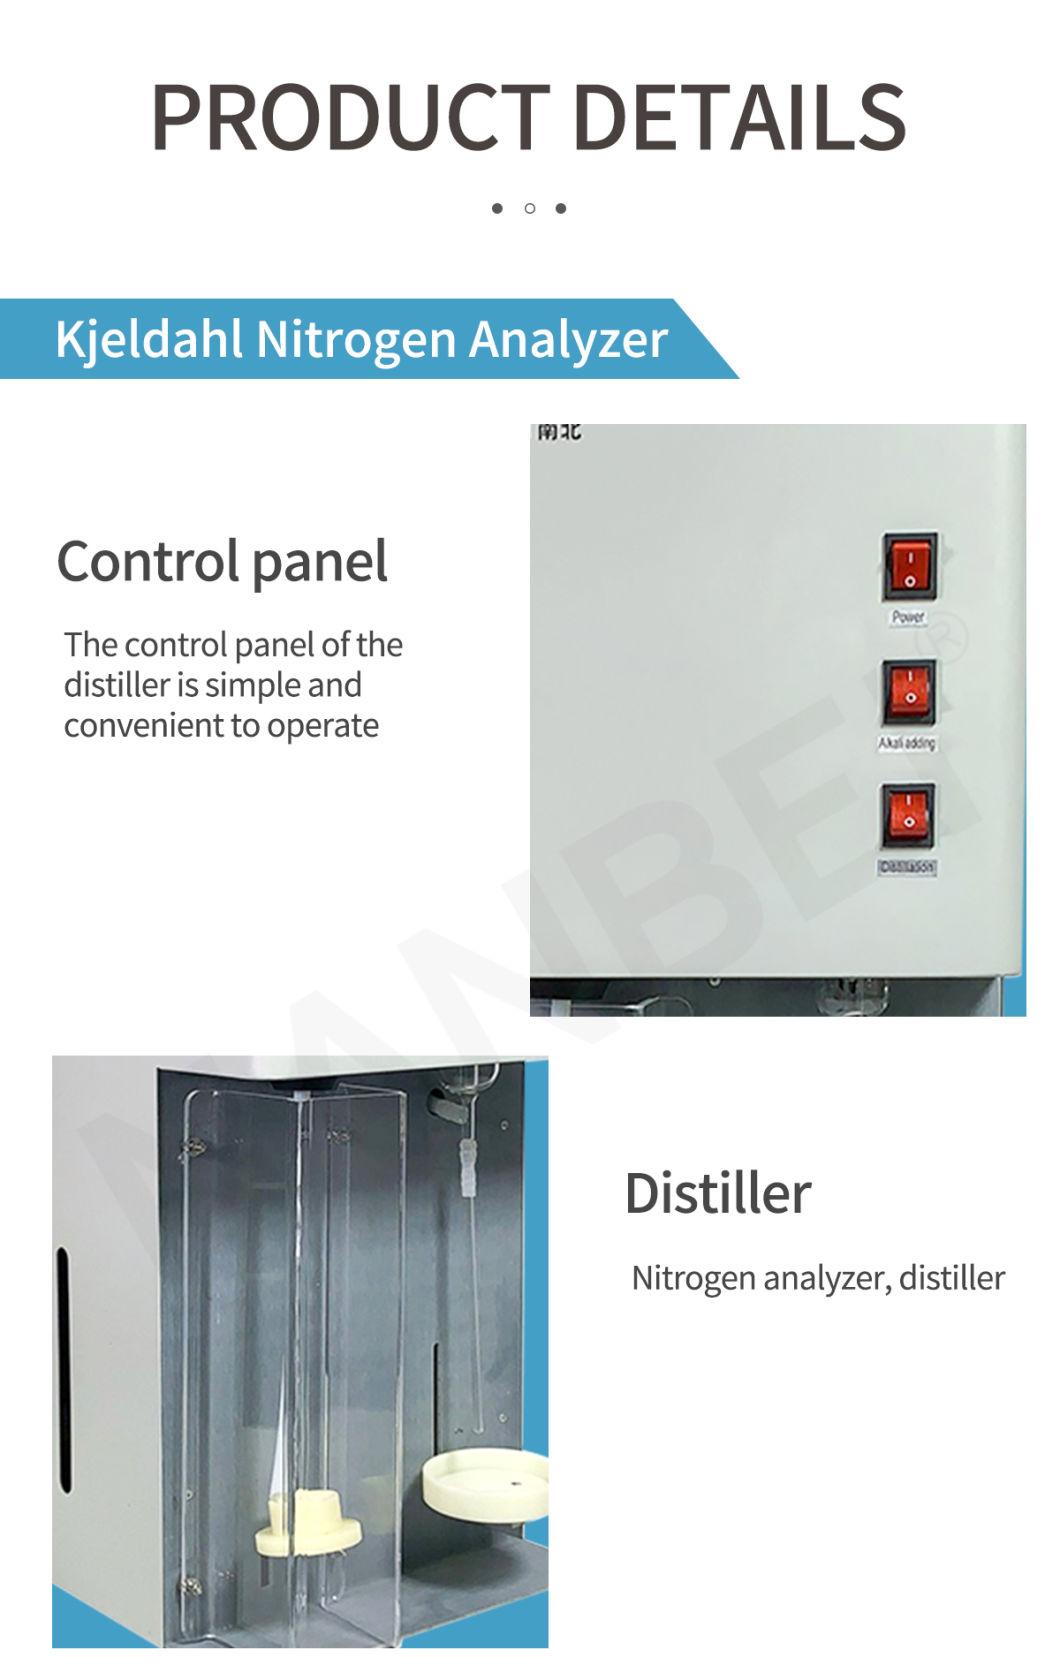 Kjeldahl Nitrogen Analyzer for Protein Testing